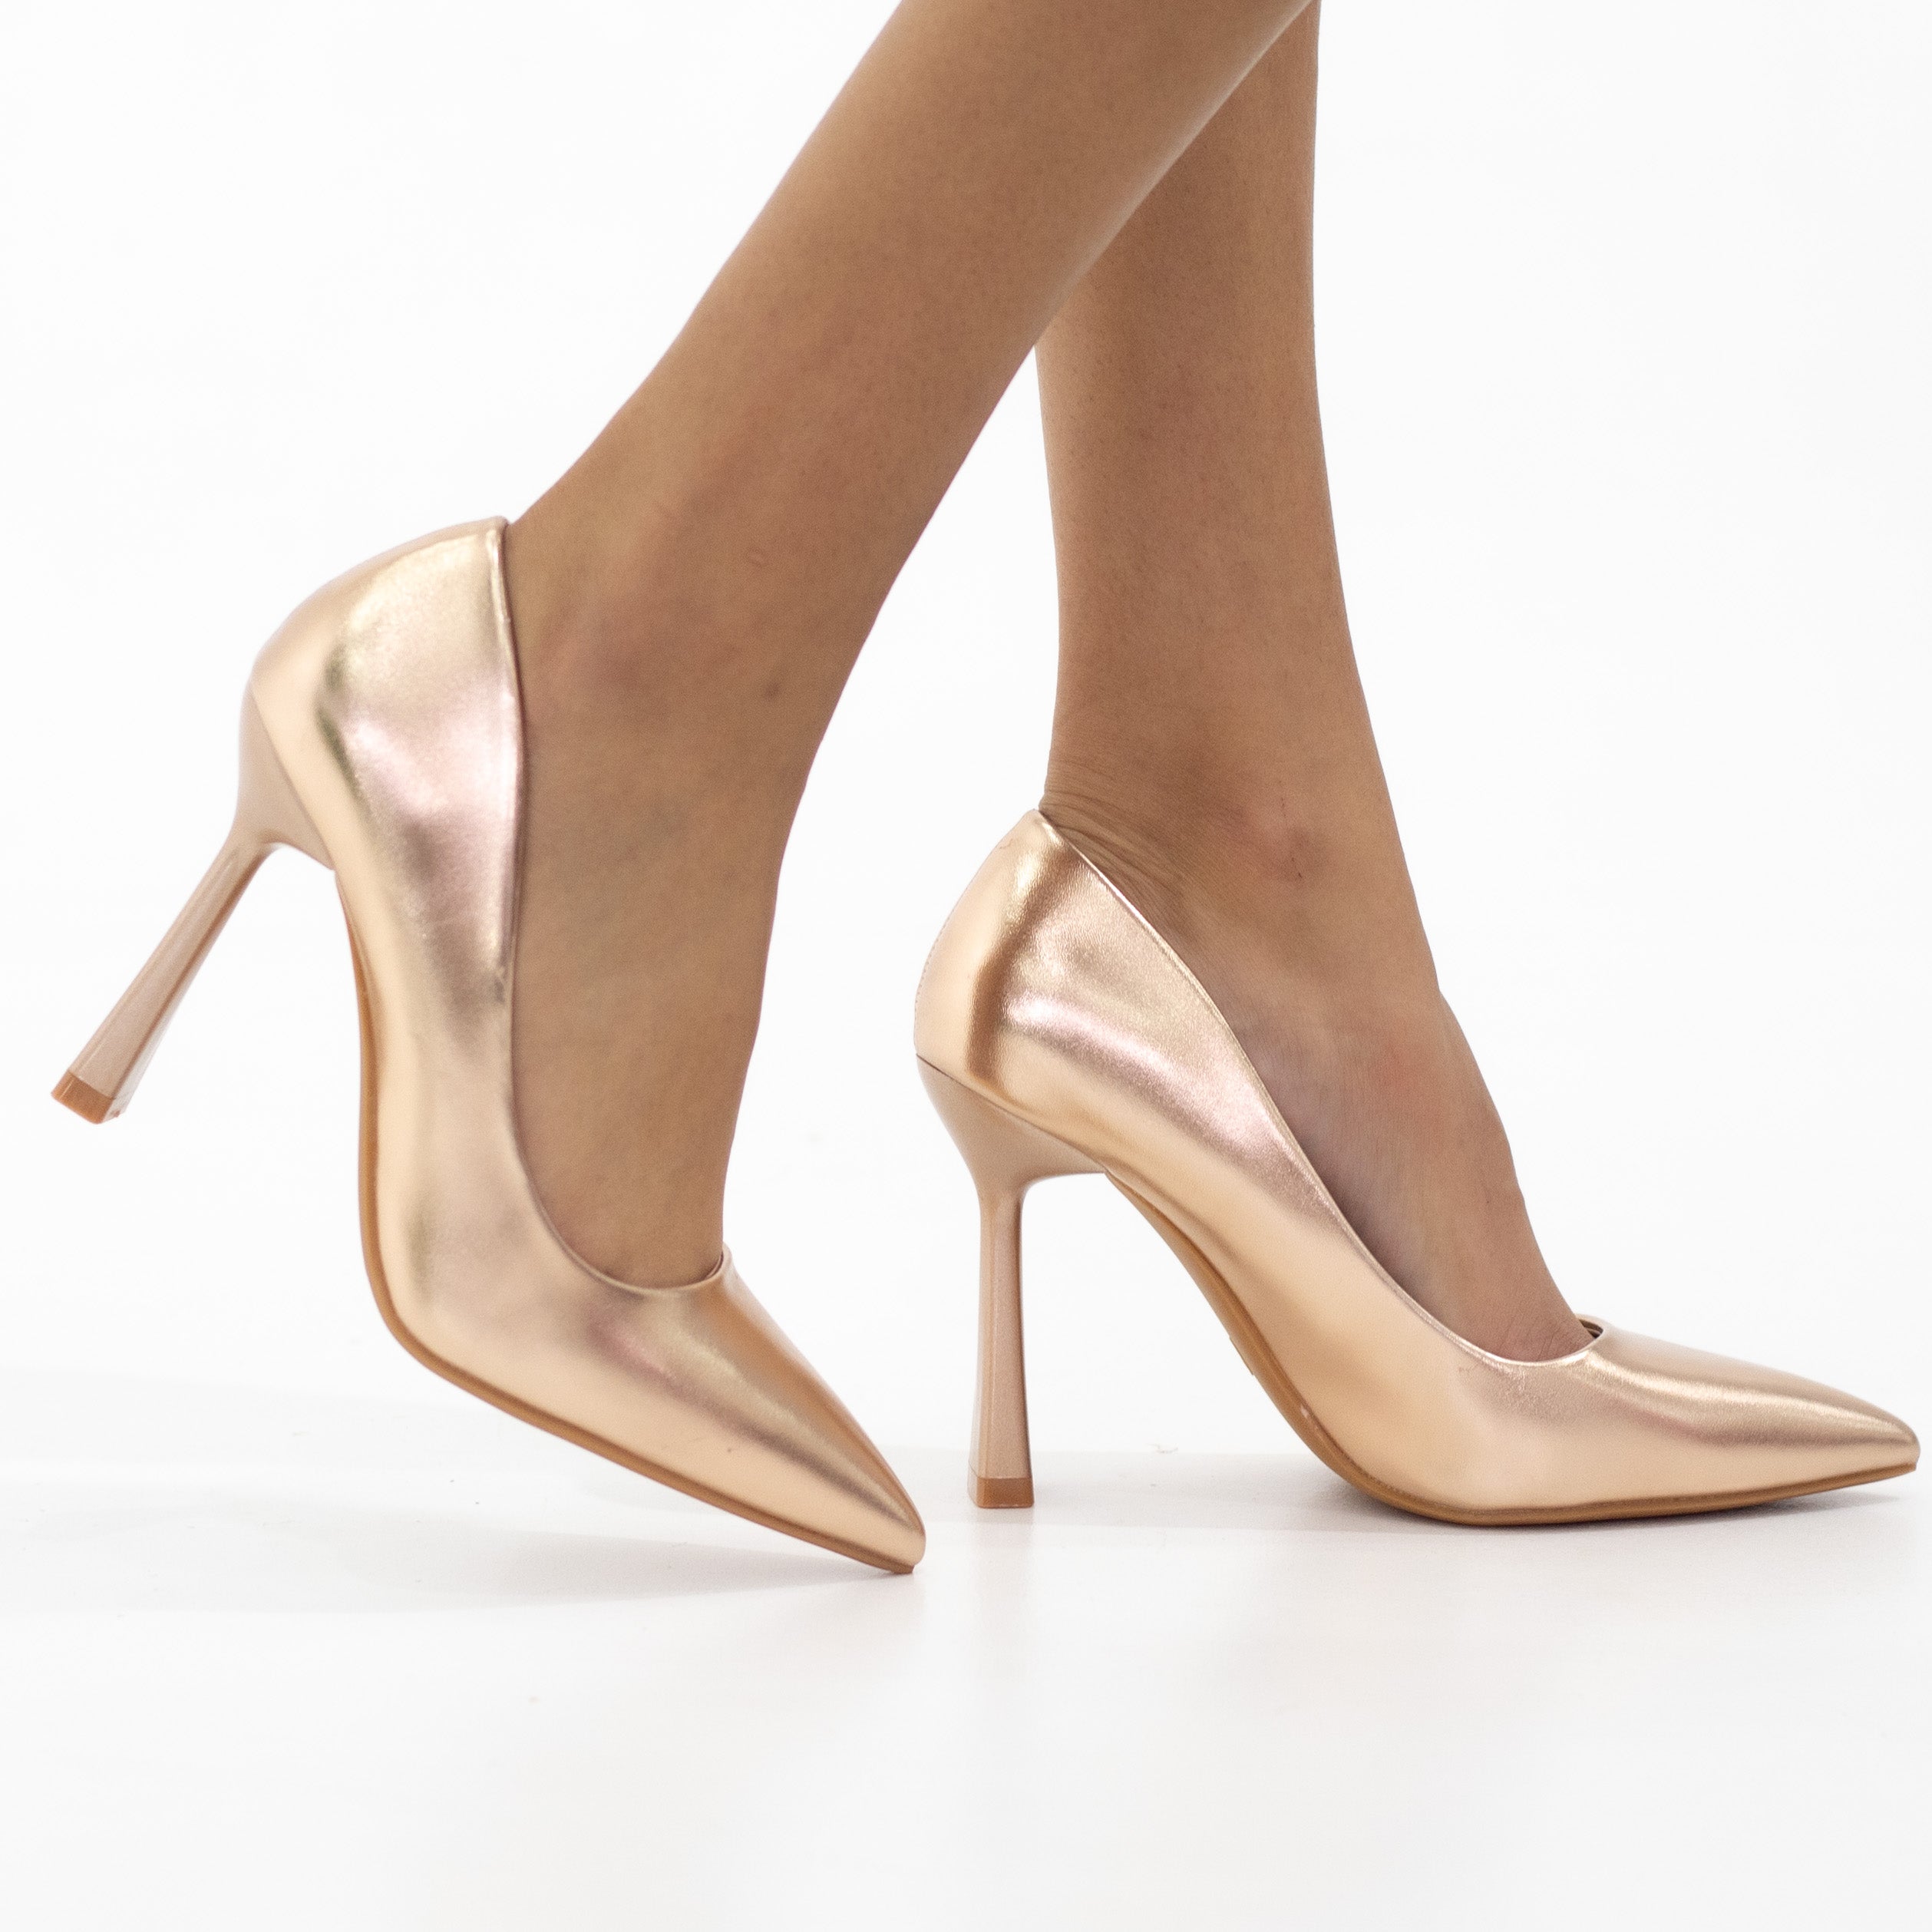 June 10cm sleek stiletto heel court shoes rose gold